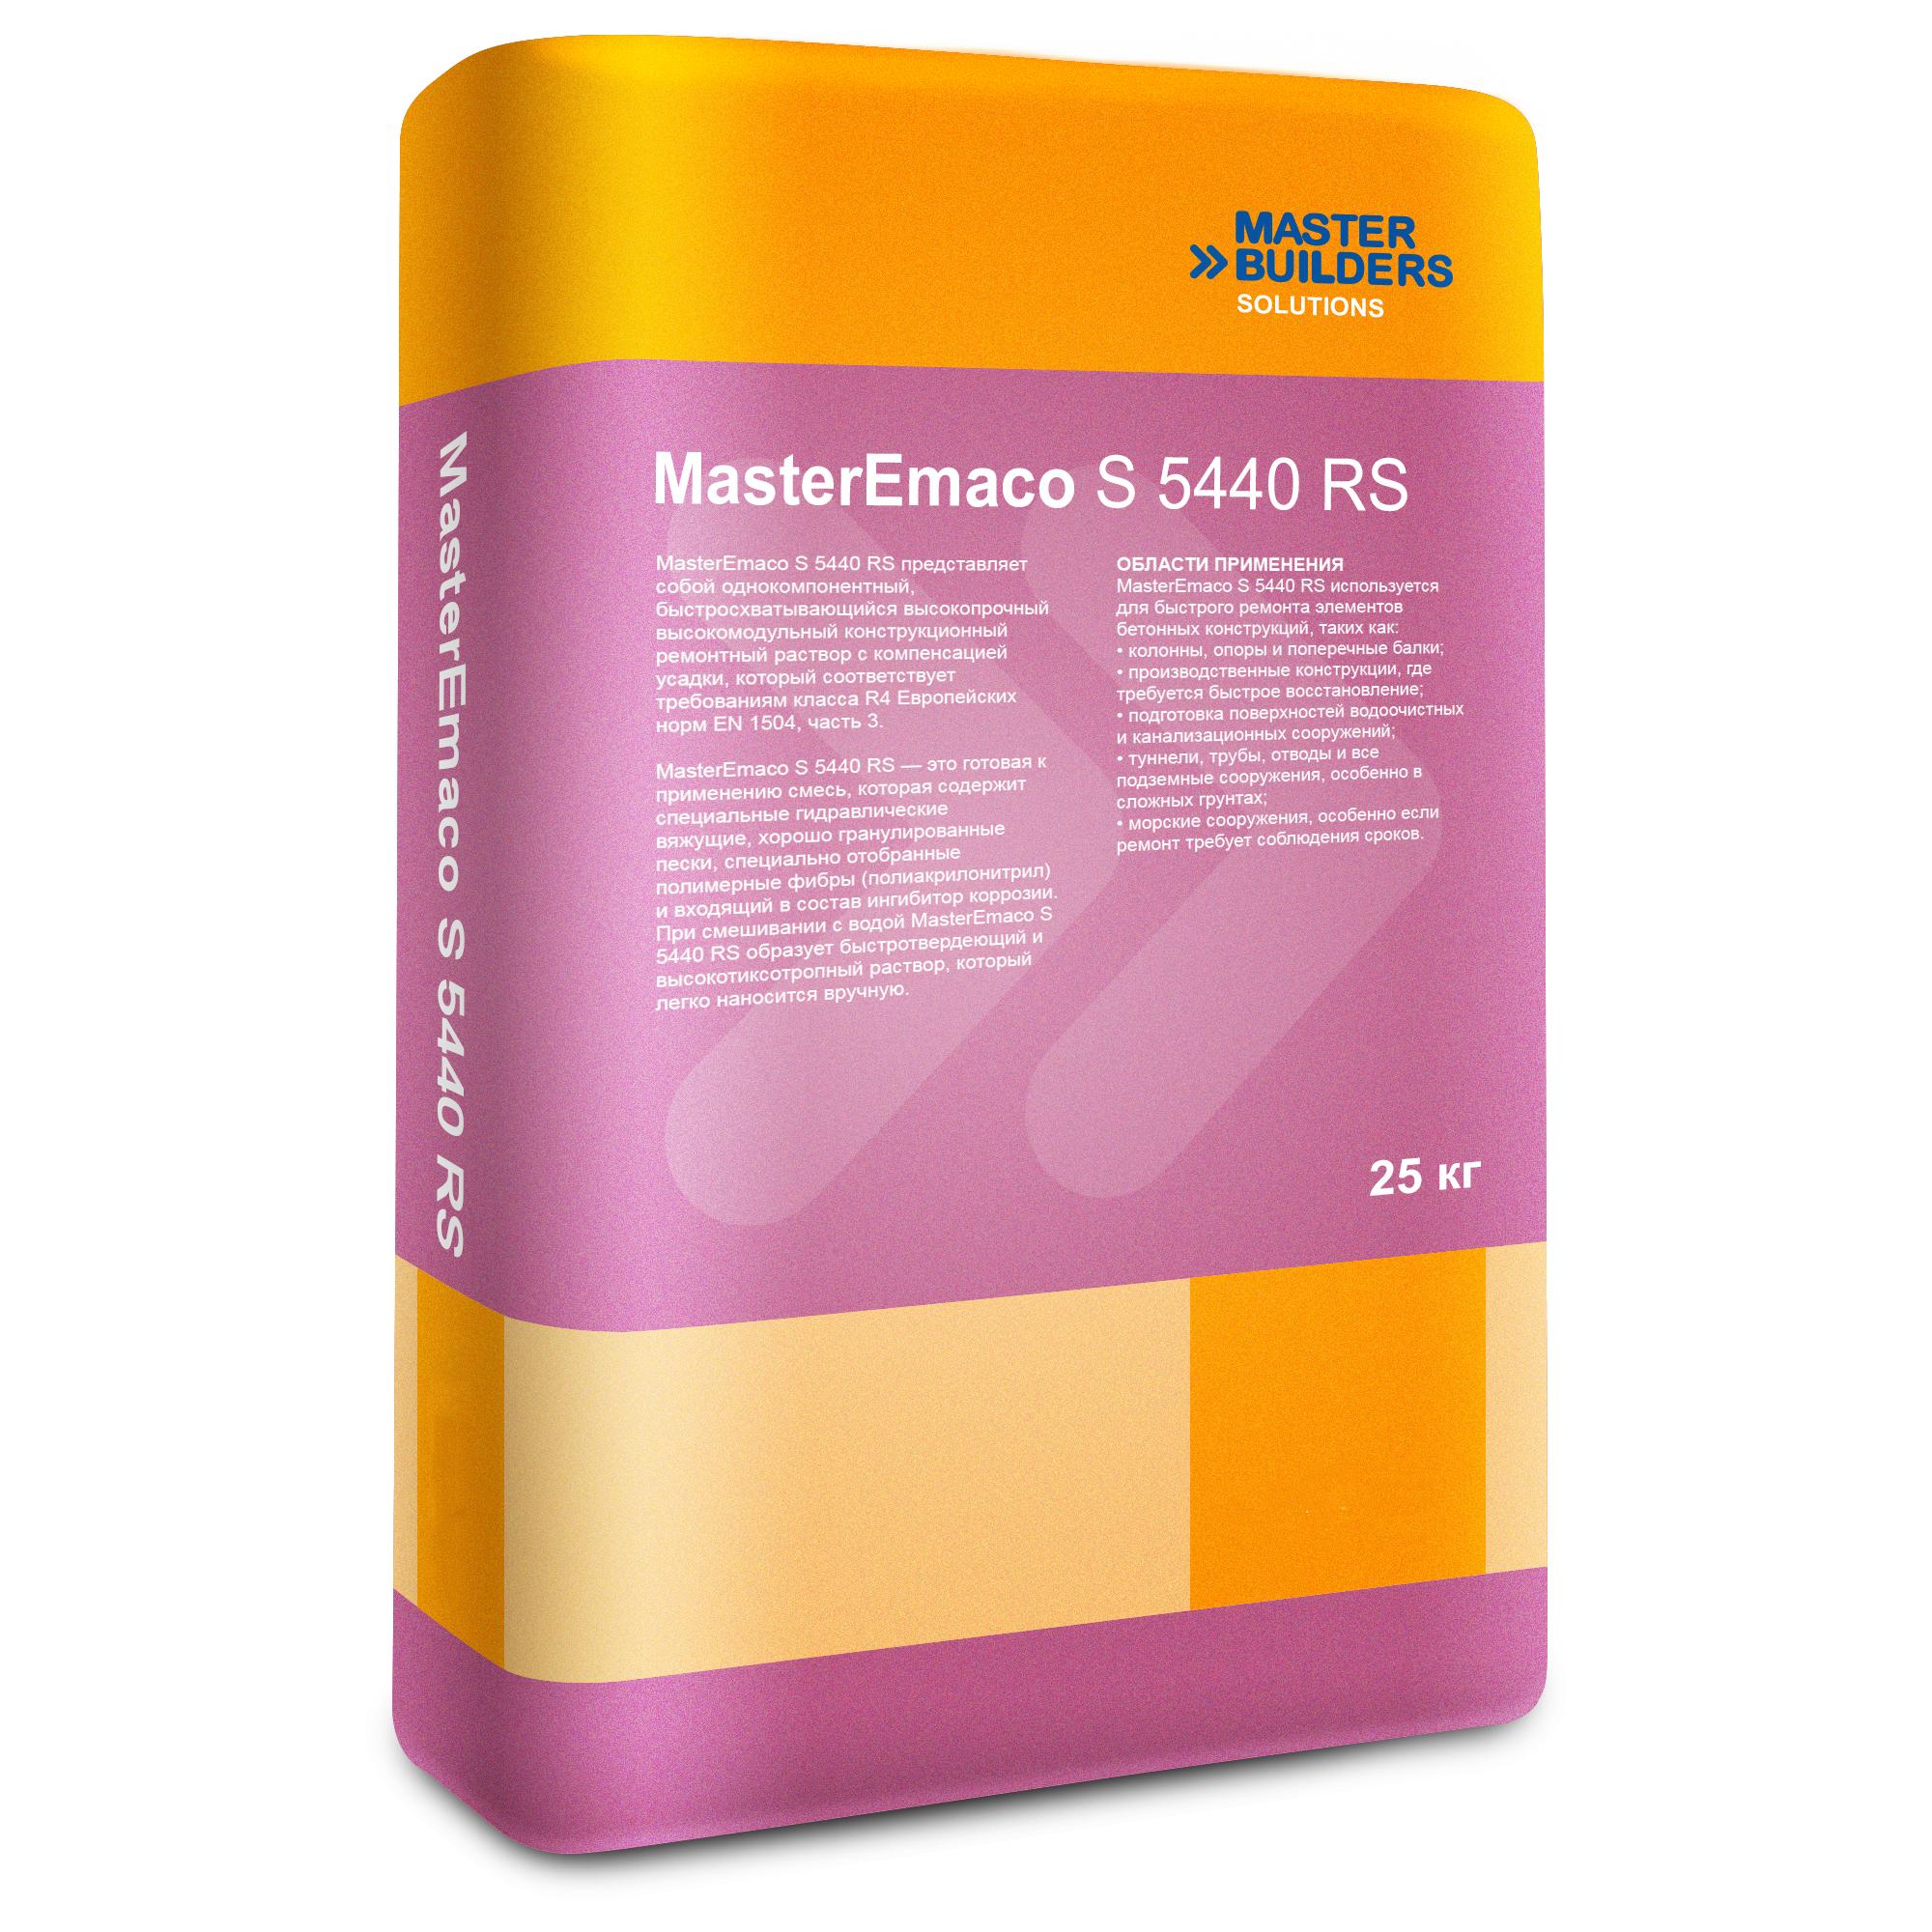 MasterEmaco S 5440 RS